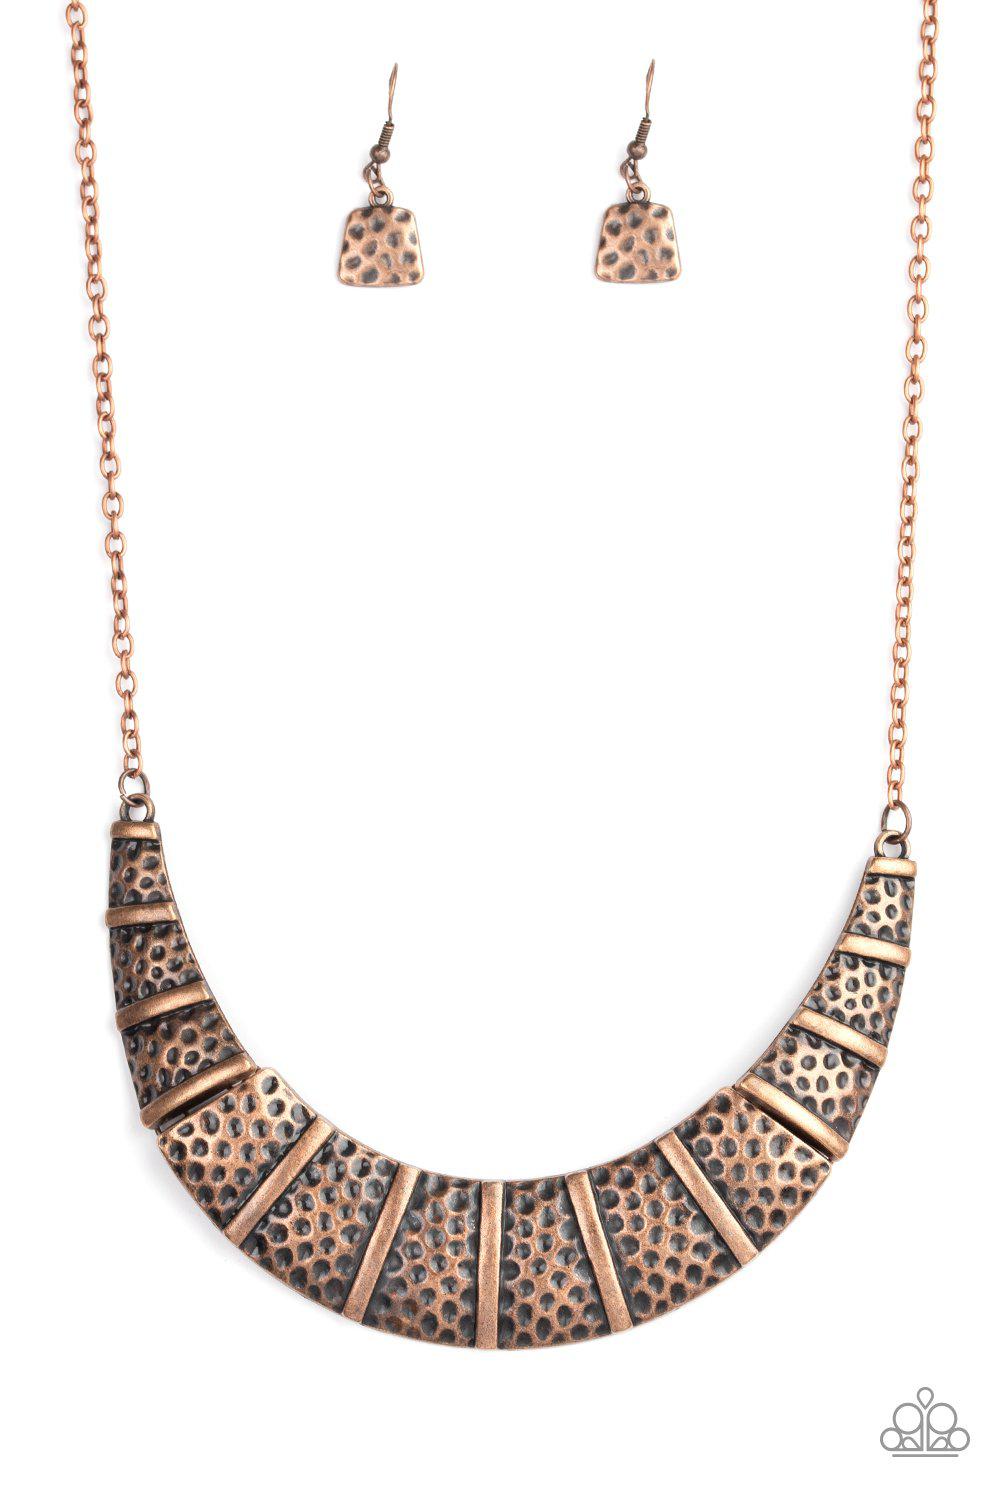 Metallic Mechanics Copper Necklace - Paparazzi Accessories - lightbox -CarasShop.com - $5 Jewelry by Cara Jewels